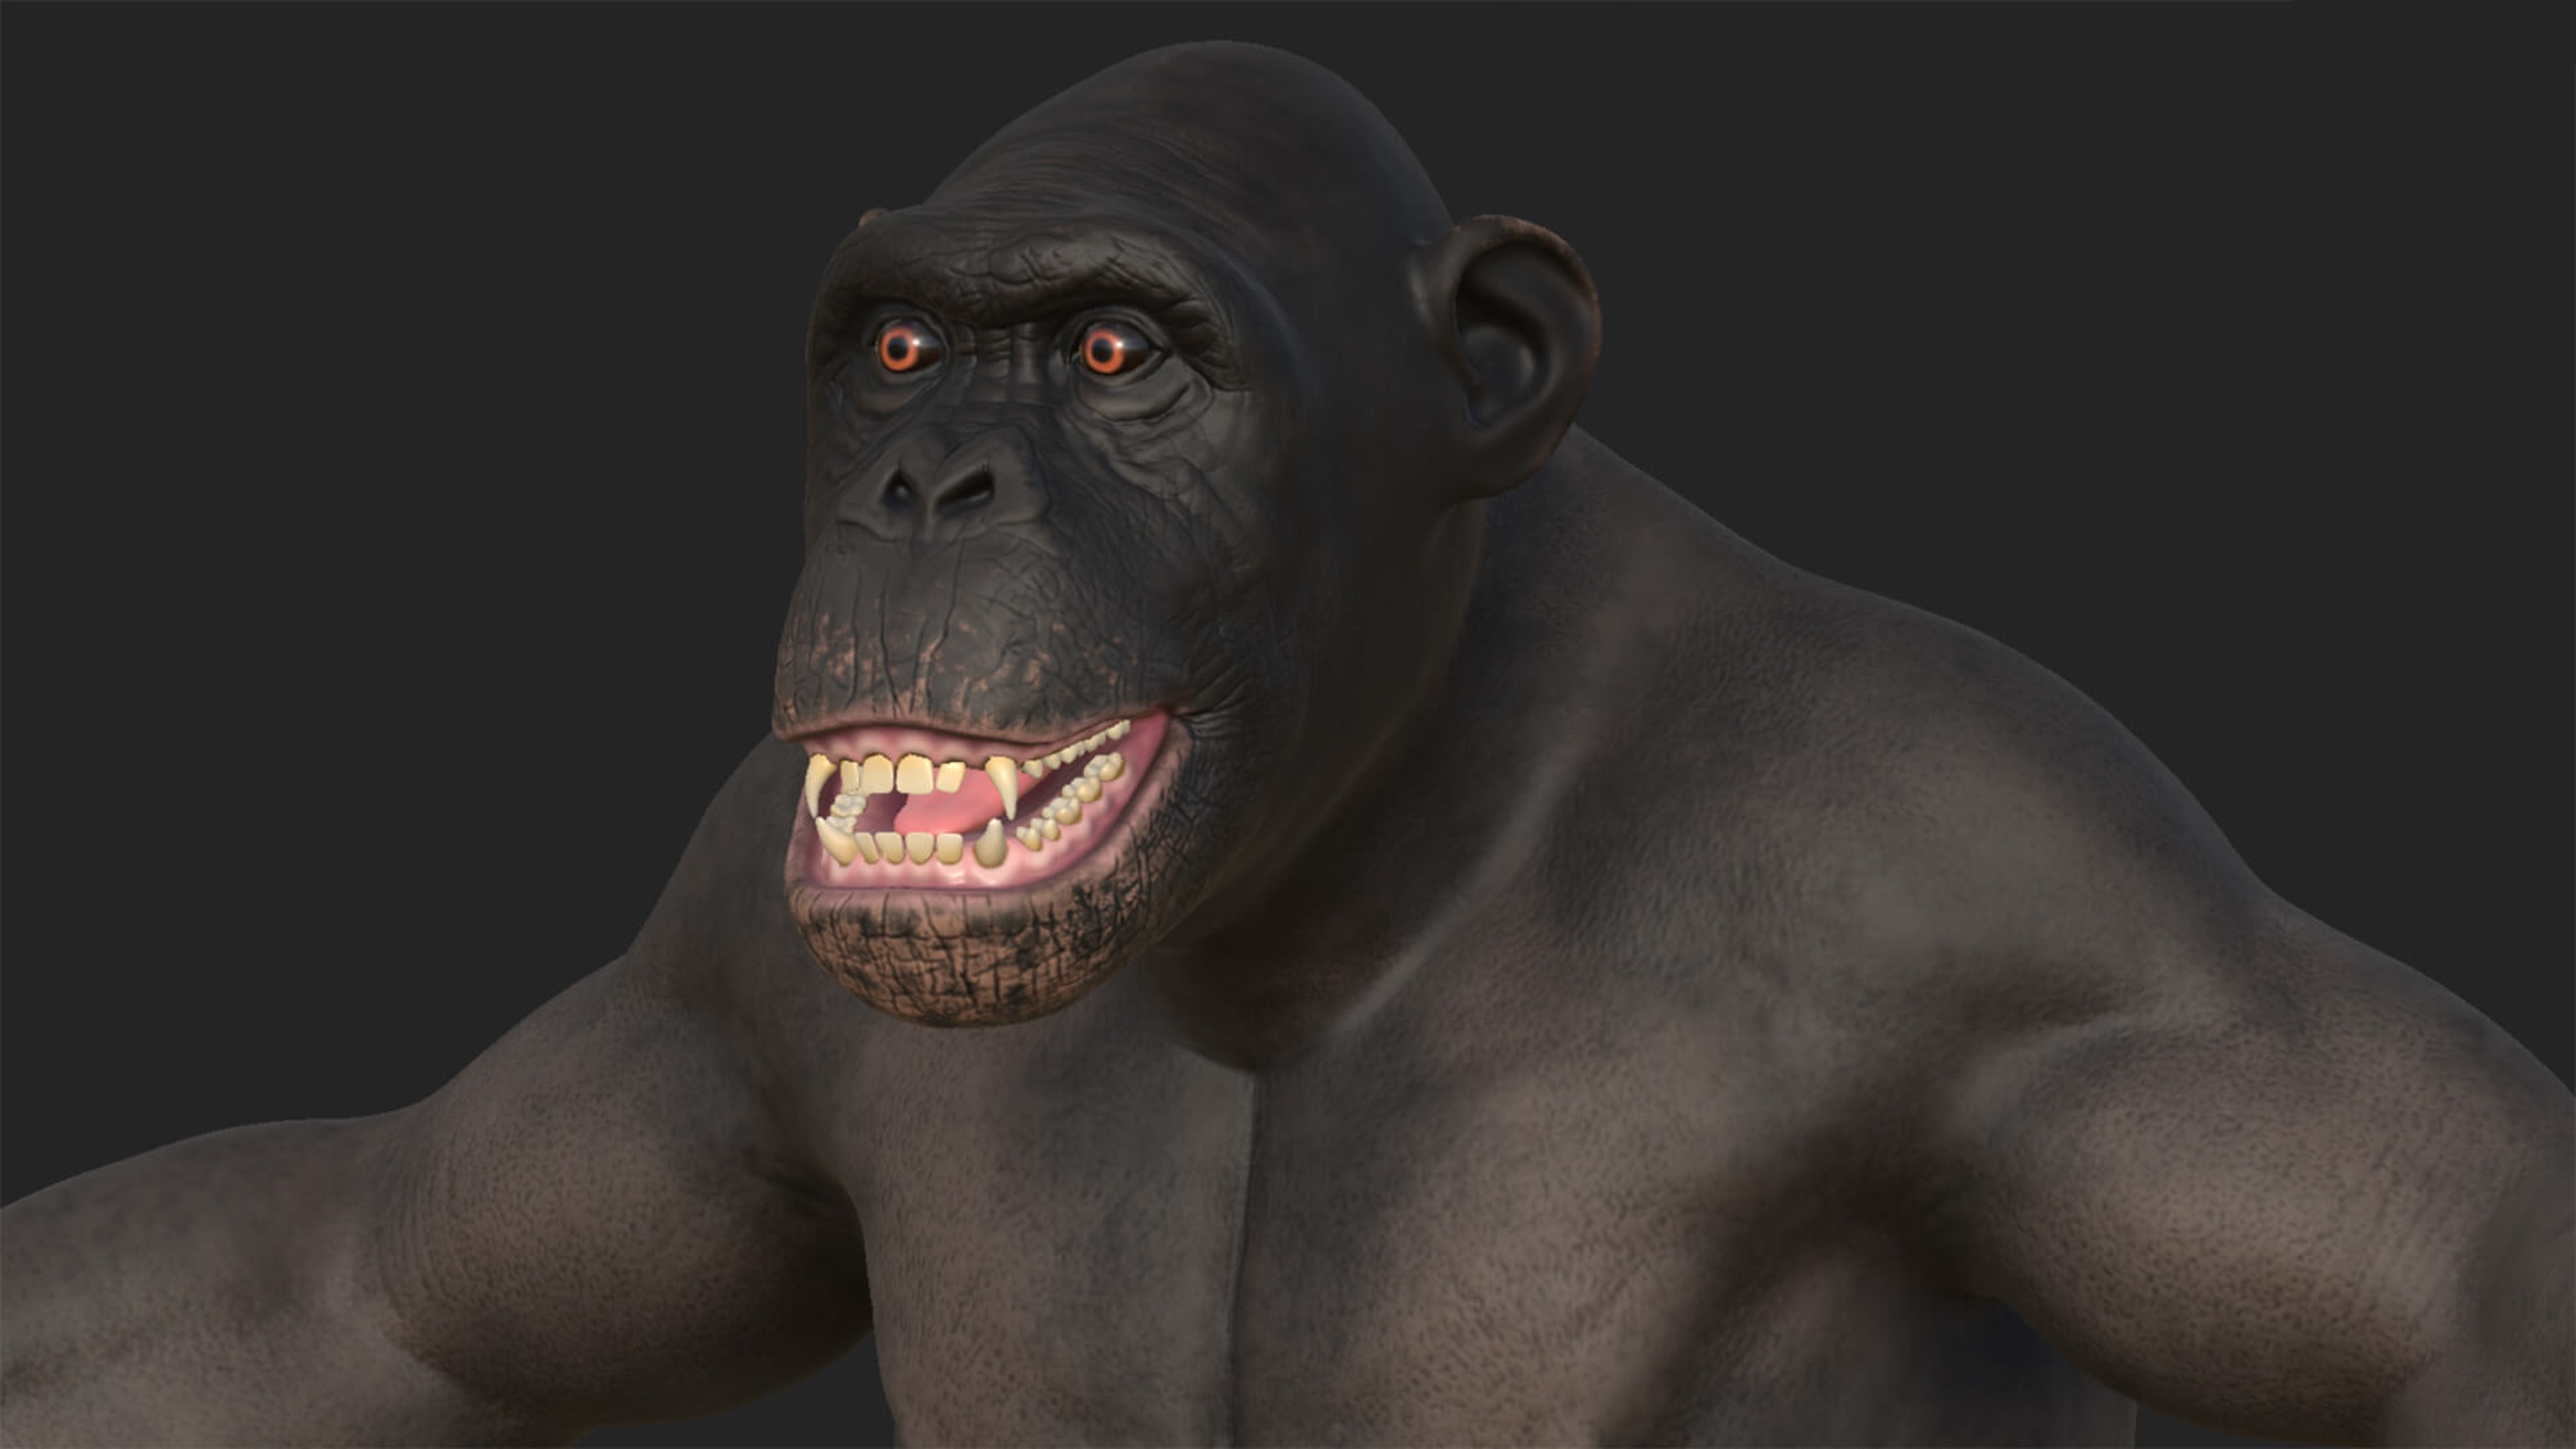 Animated chimpanzee 's face